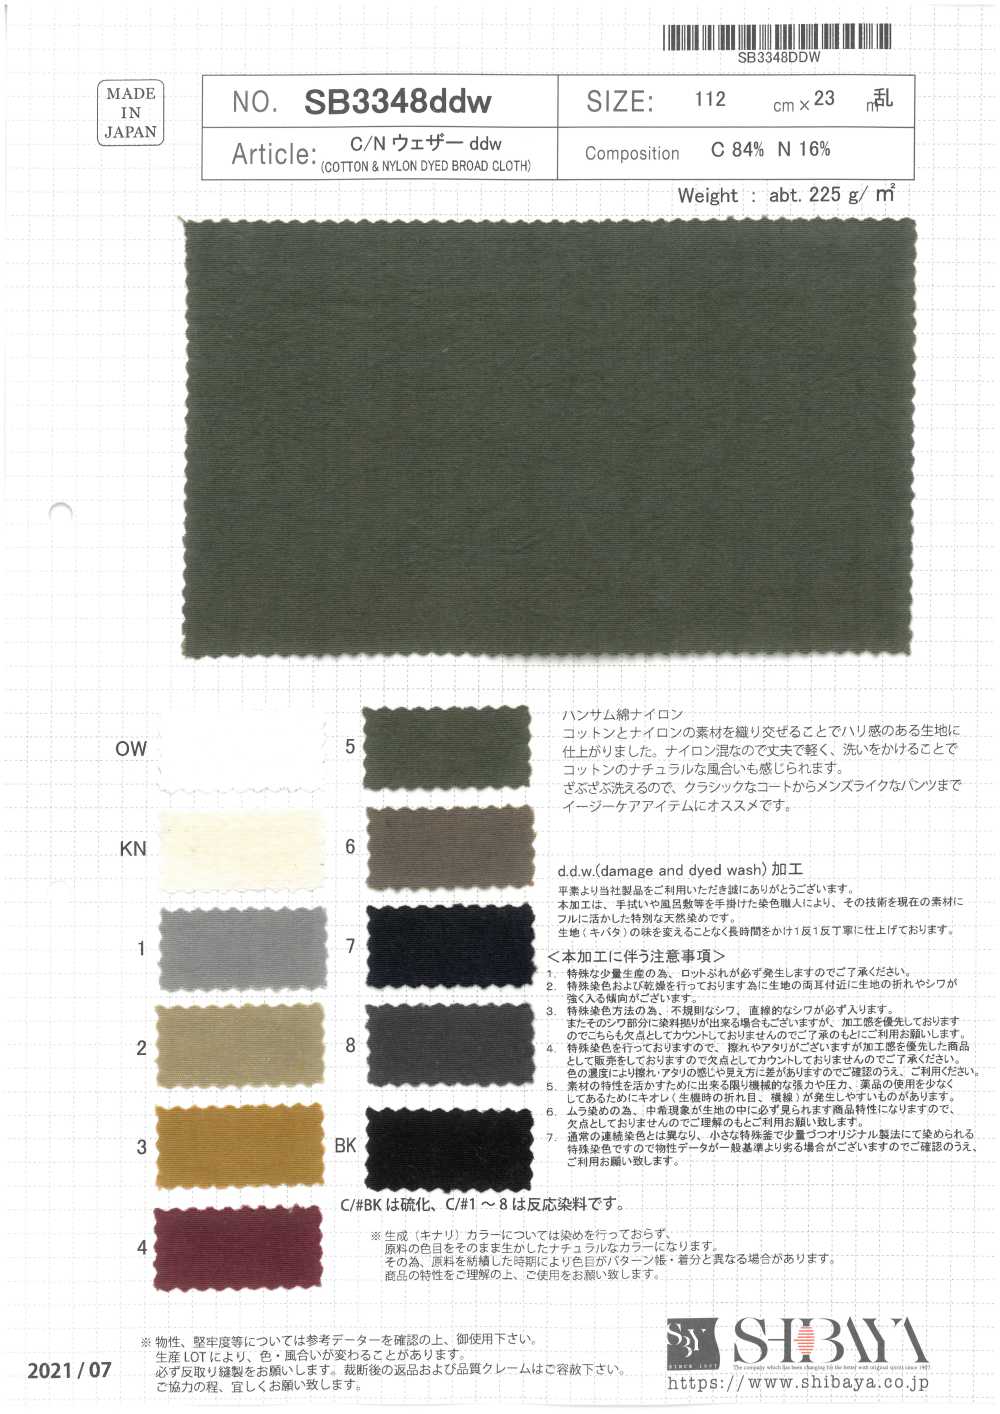 SB3348ddw Chiffon En Coton/nylon Ddw[Fabrication De Textile] SHIBAYA